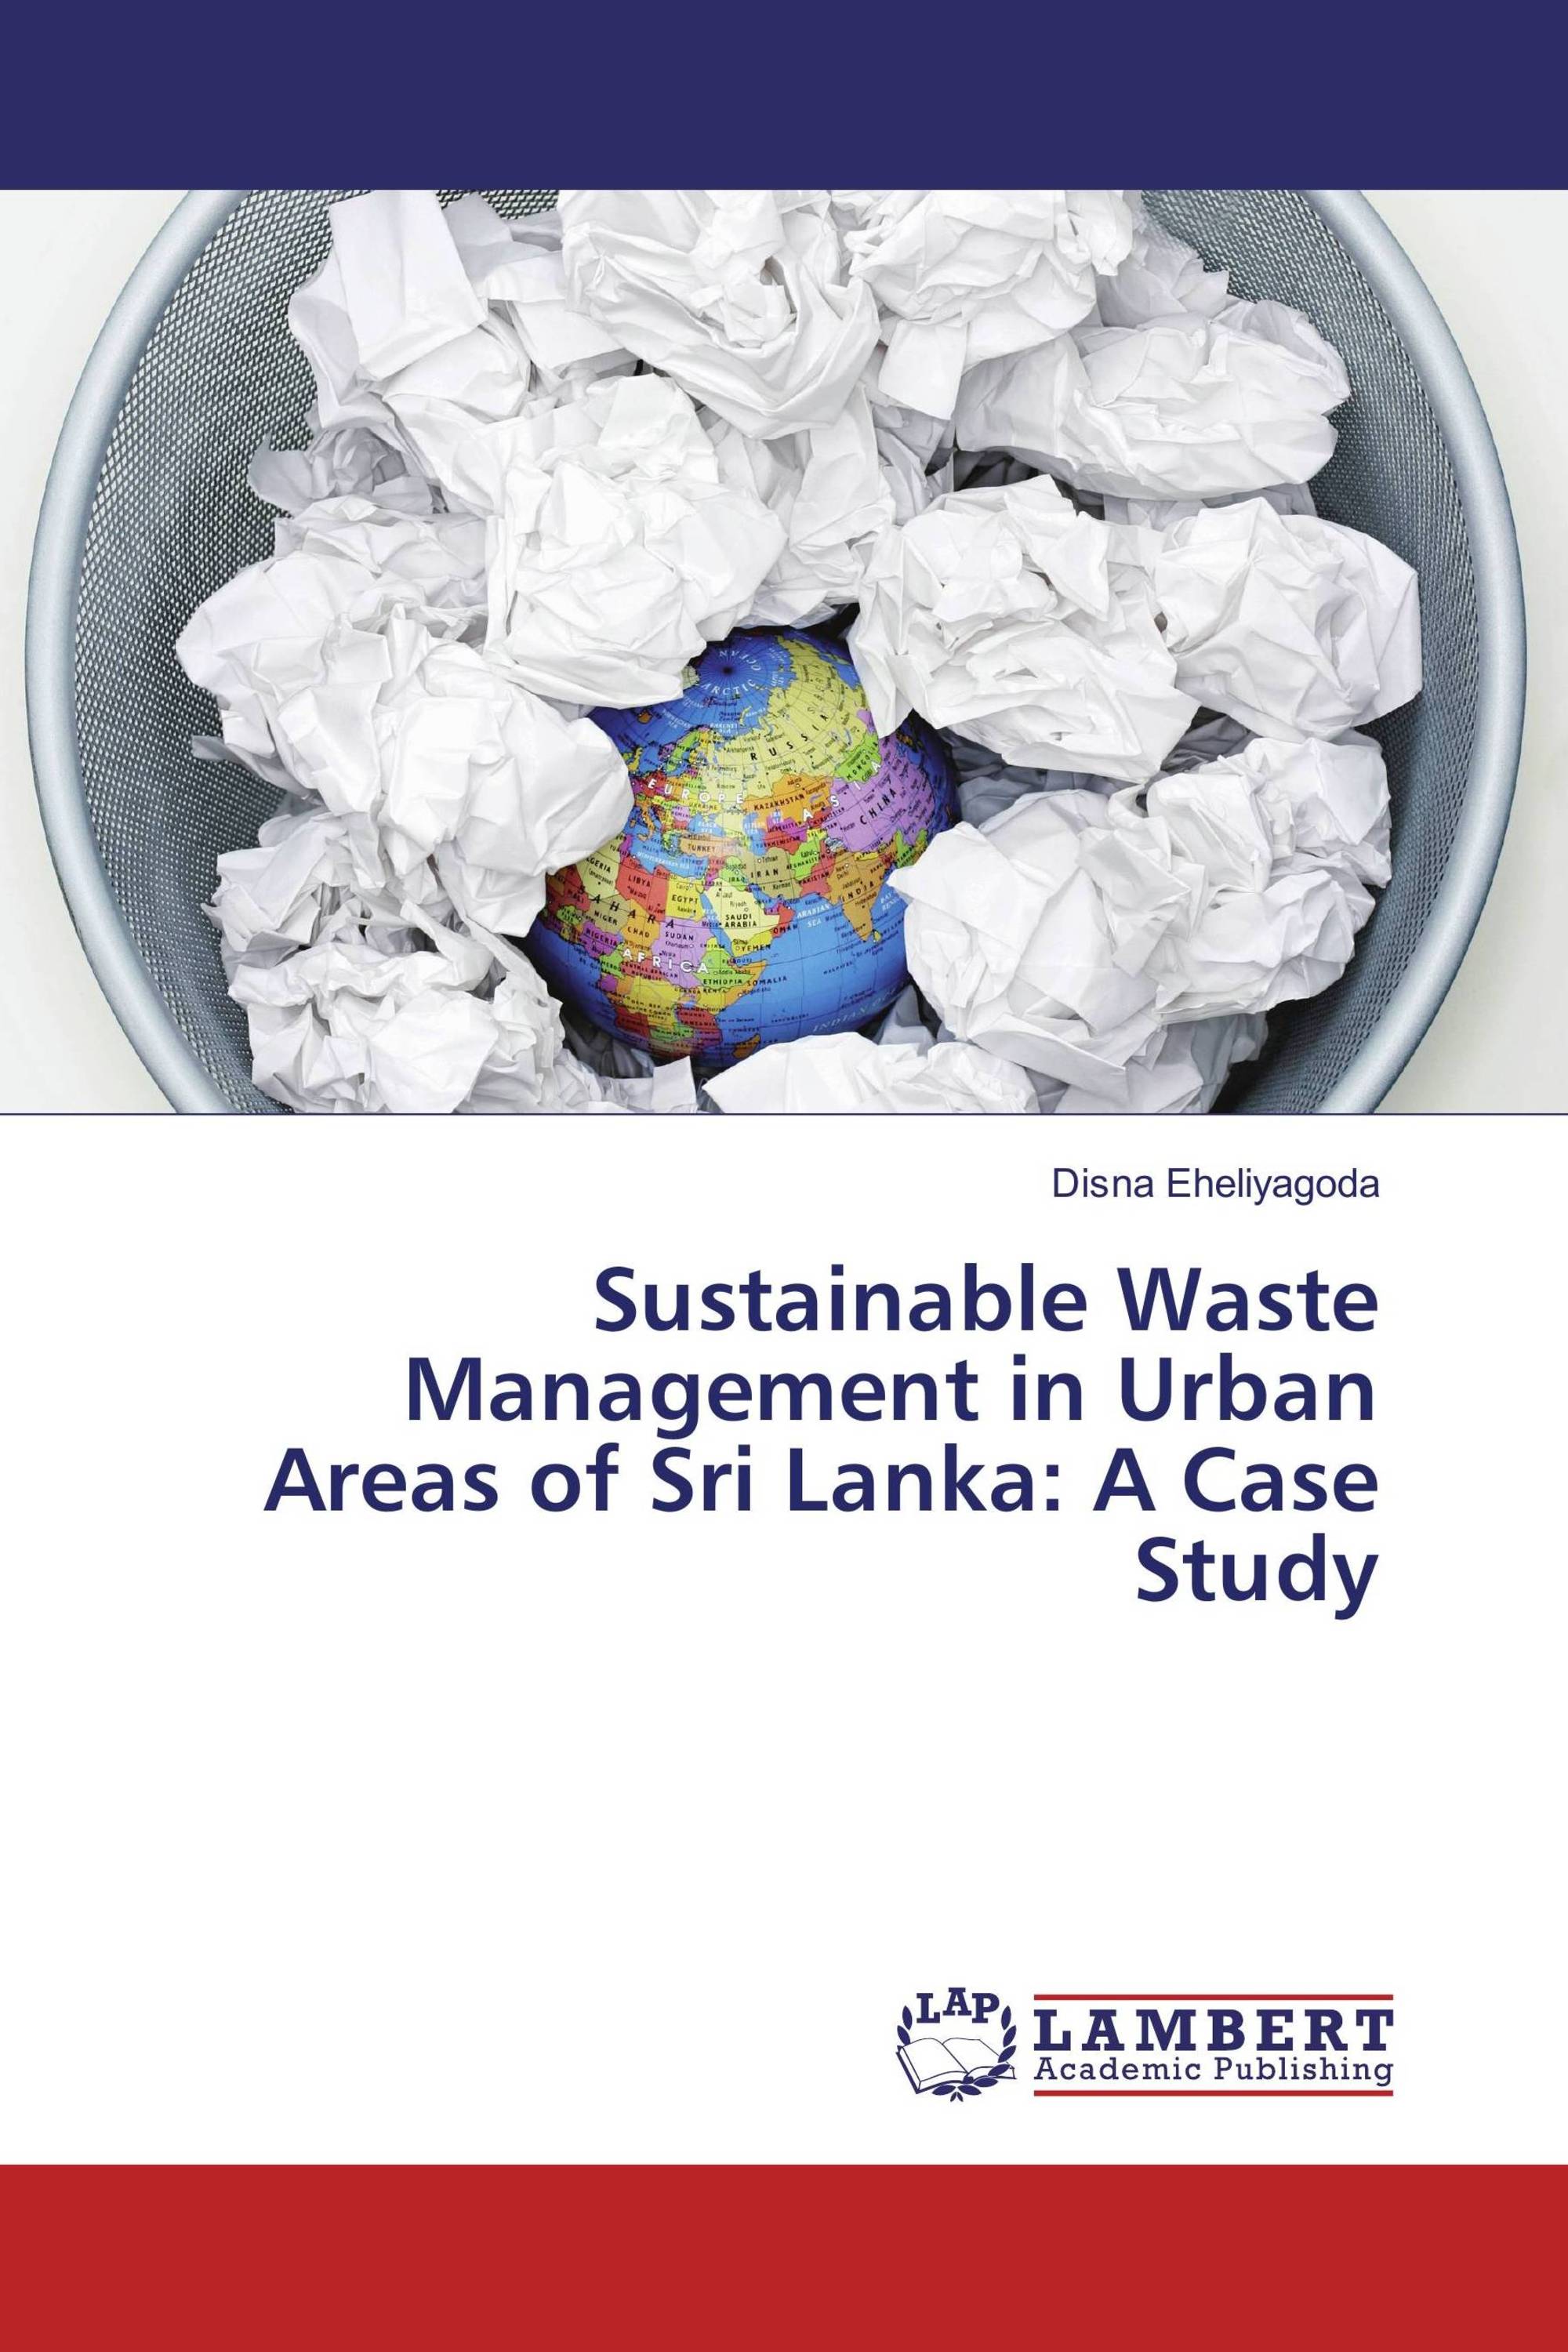 waste management pollution case study